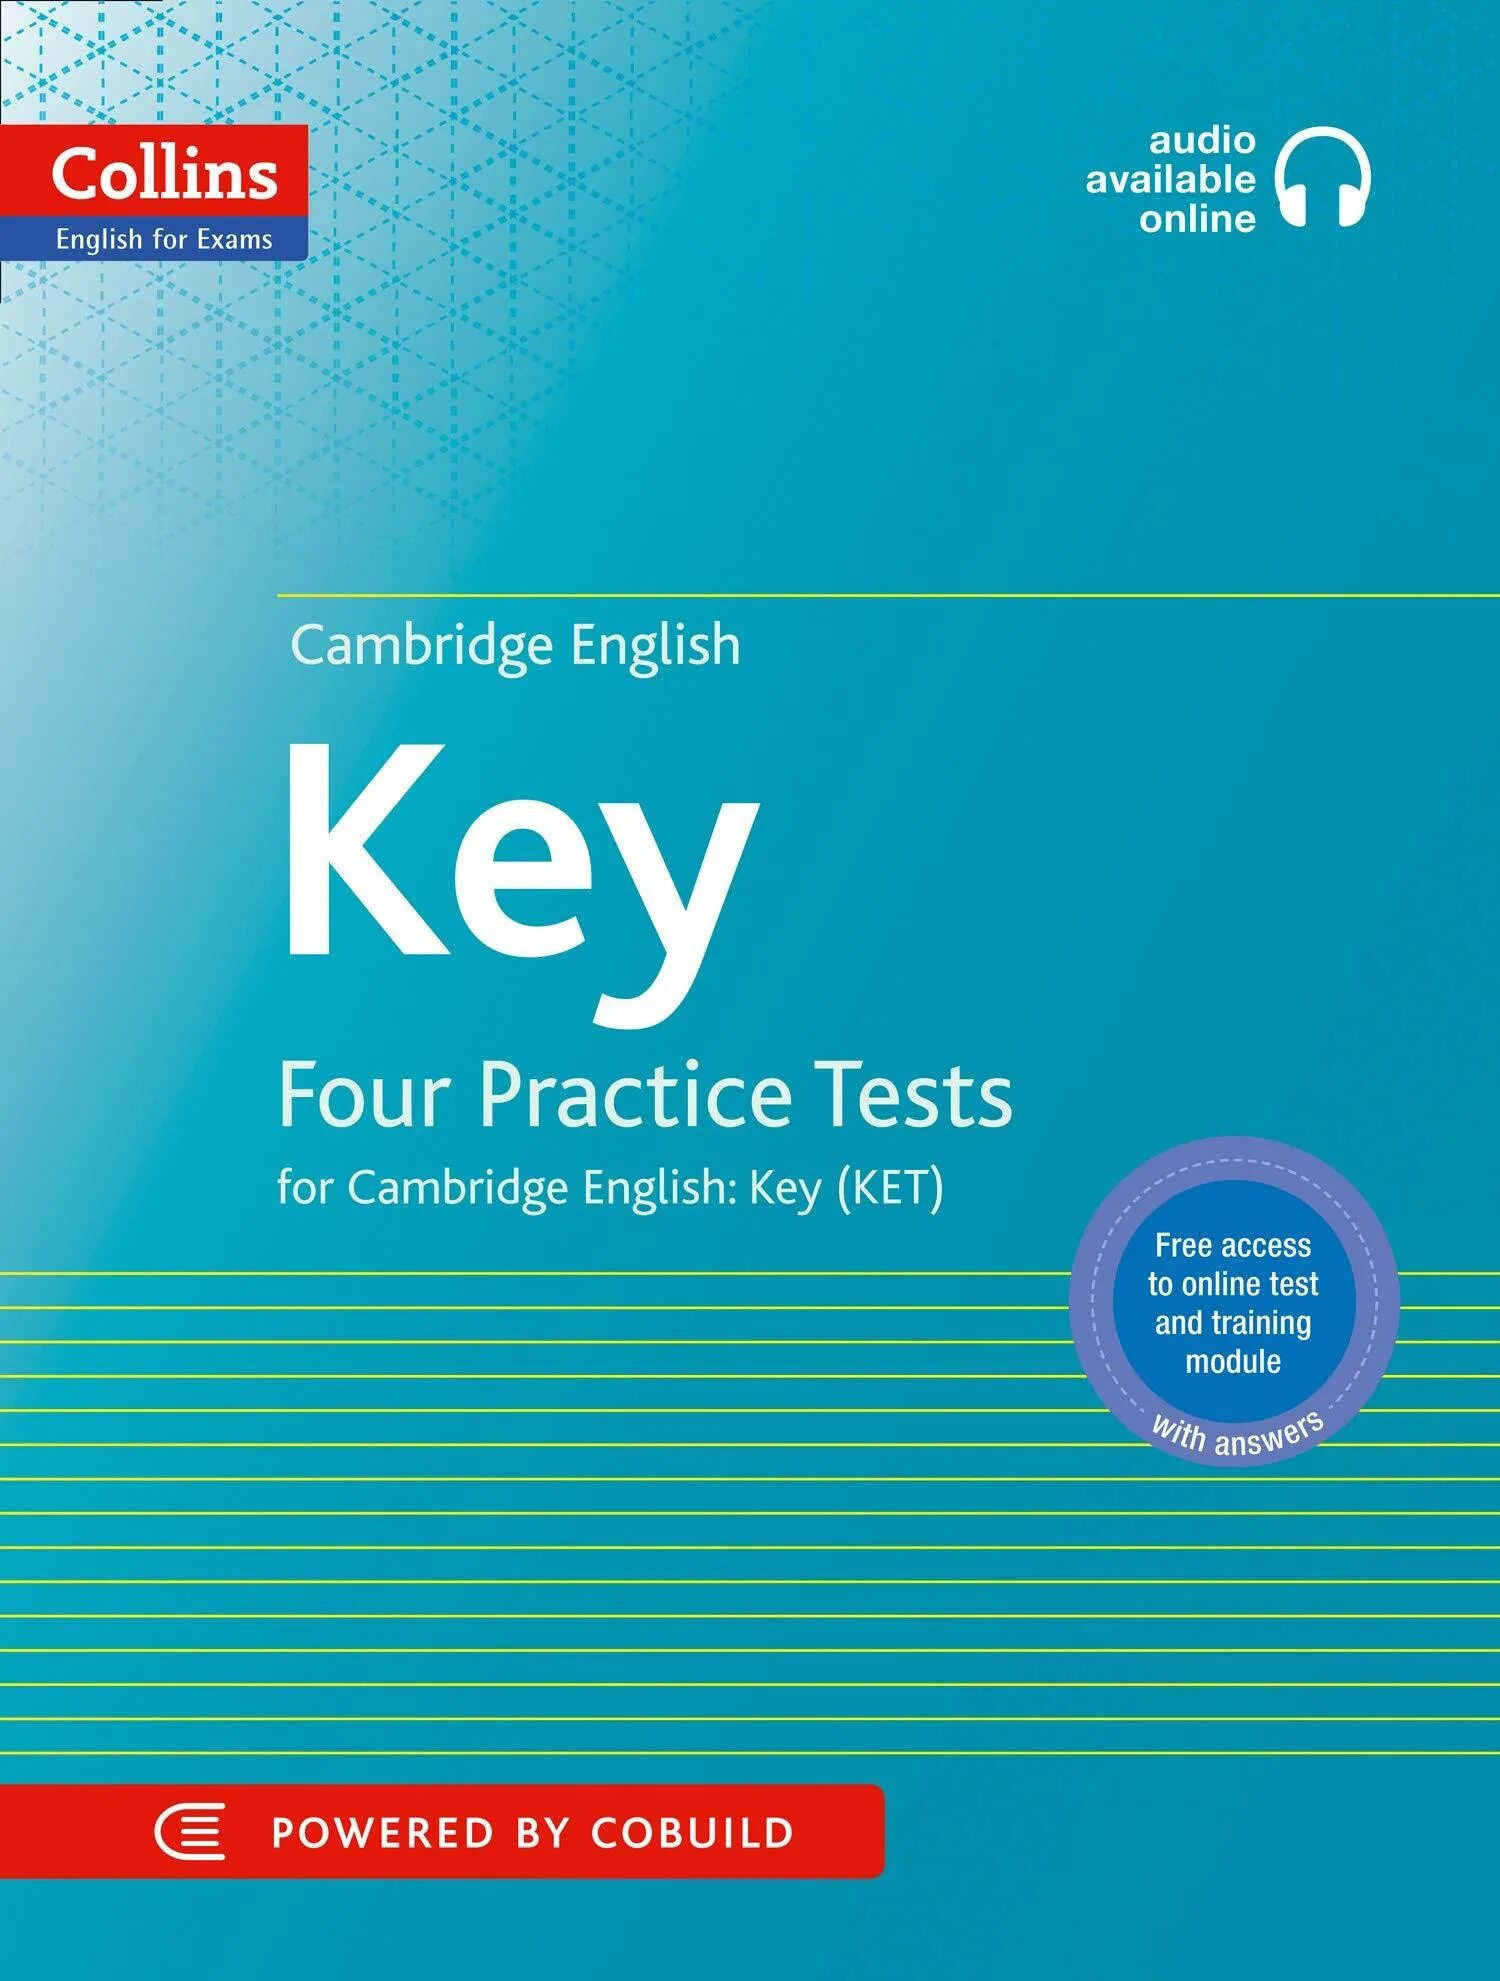 Ket Practice Tests. Ket Exam Practice Tests. Key Cambridge. Ket Cambridge. English test book